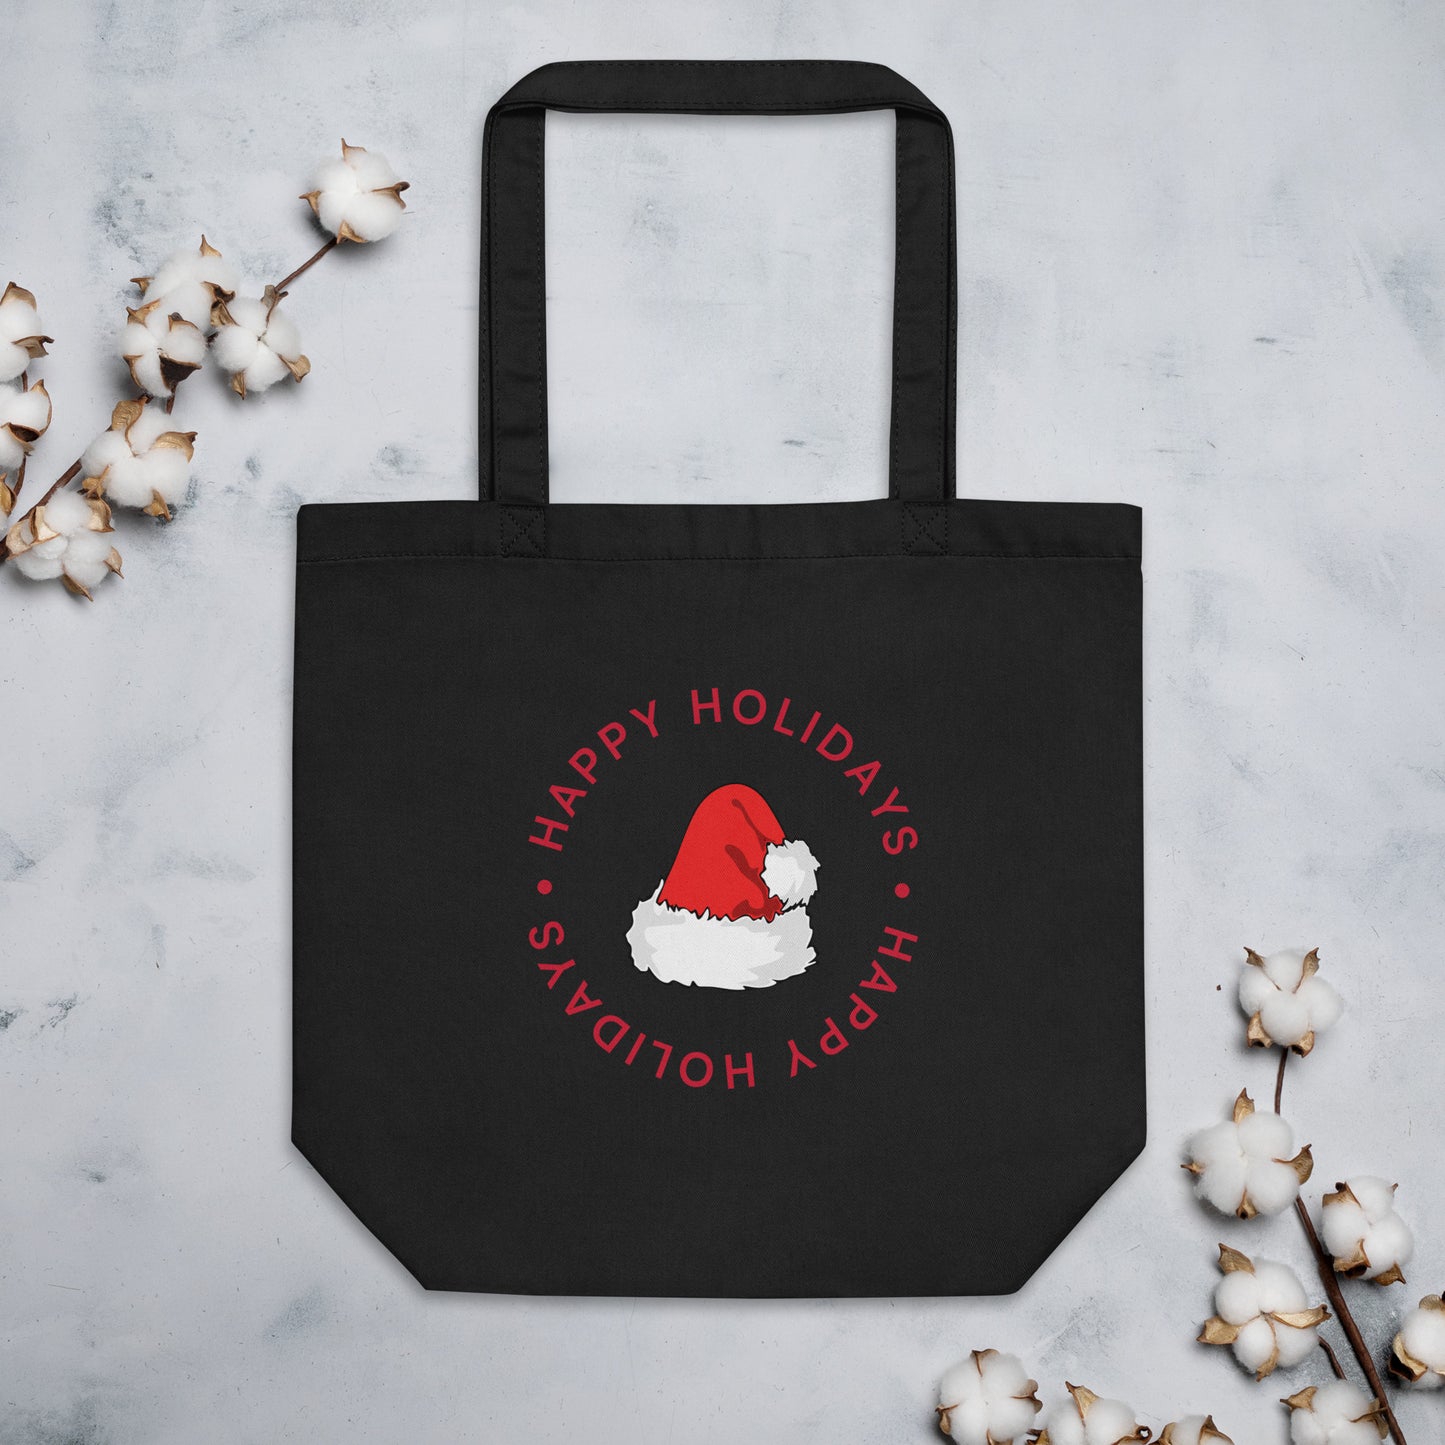 Happy Holidays Printed Eco Tote Bag